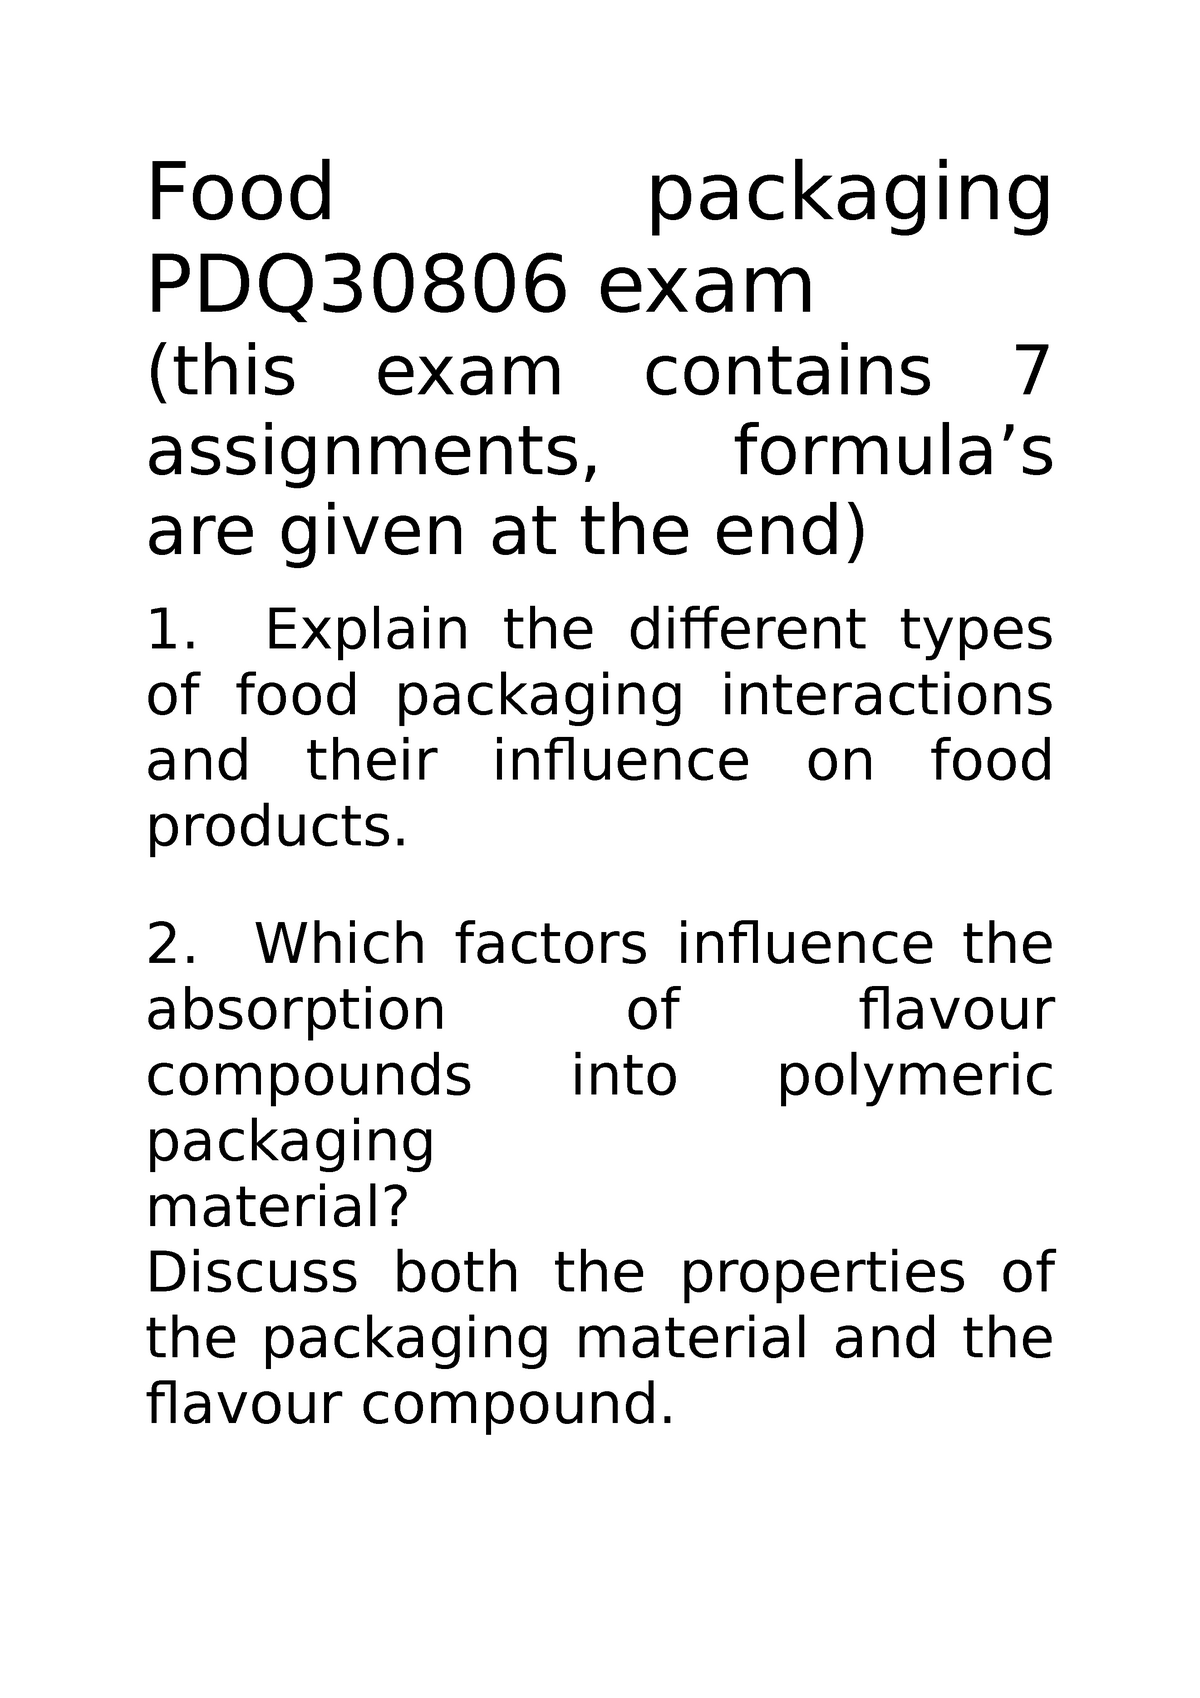 Exam practice exam Food packaging PDQ30806 exam (this exam contains